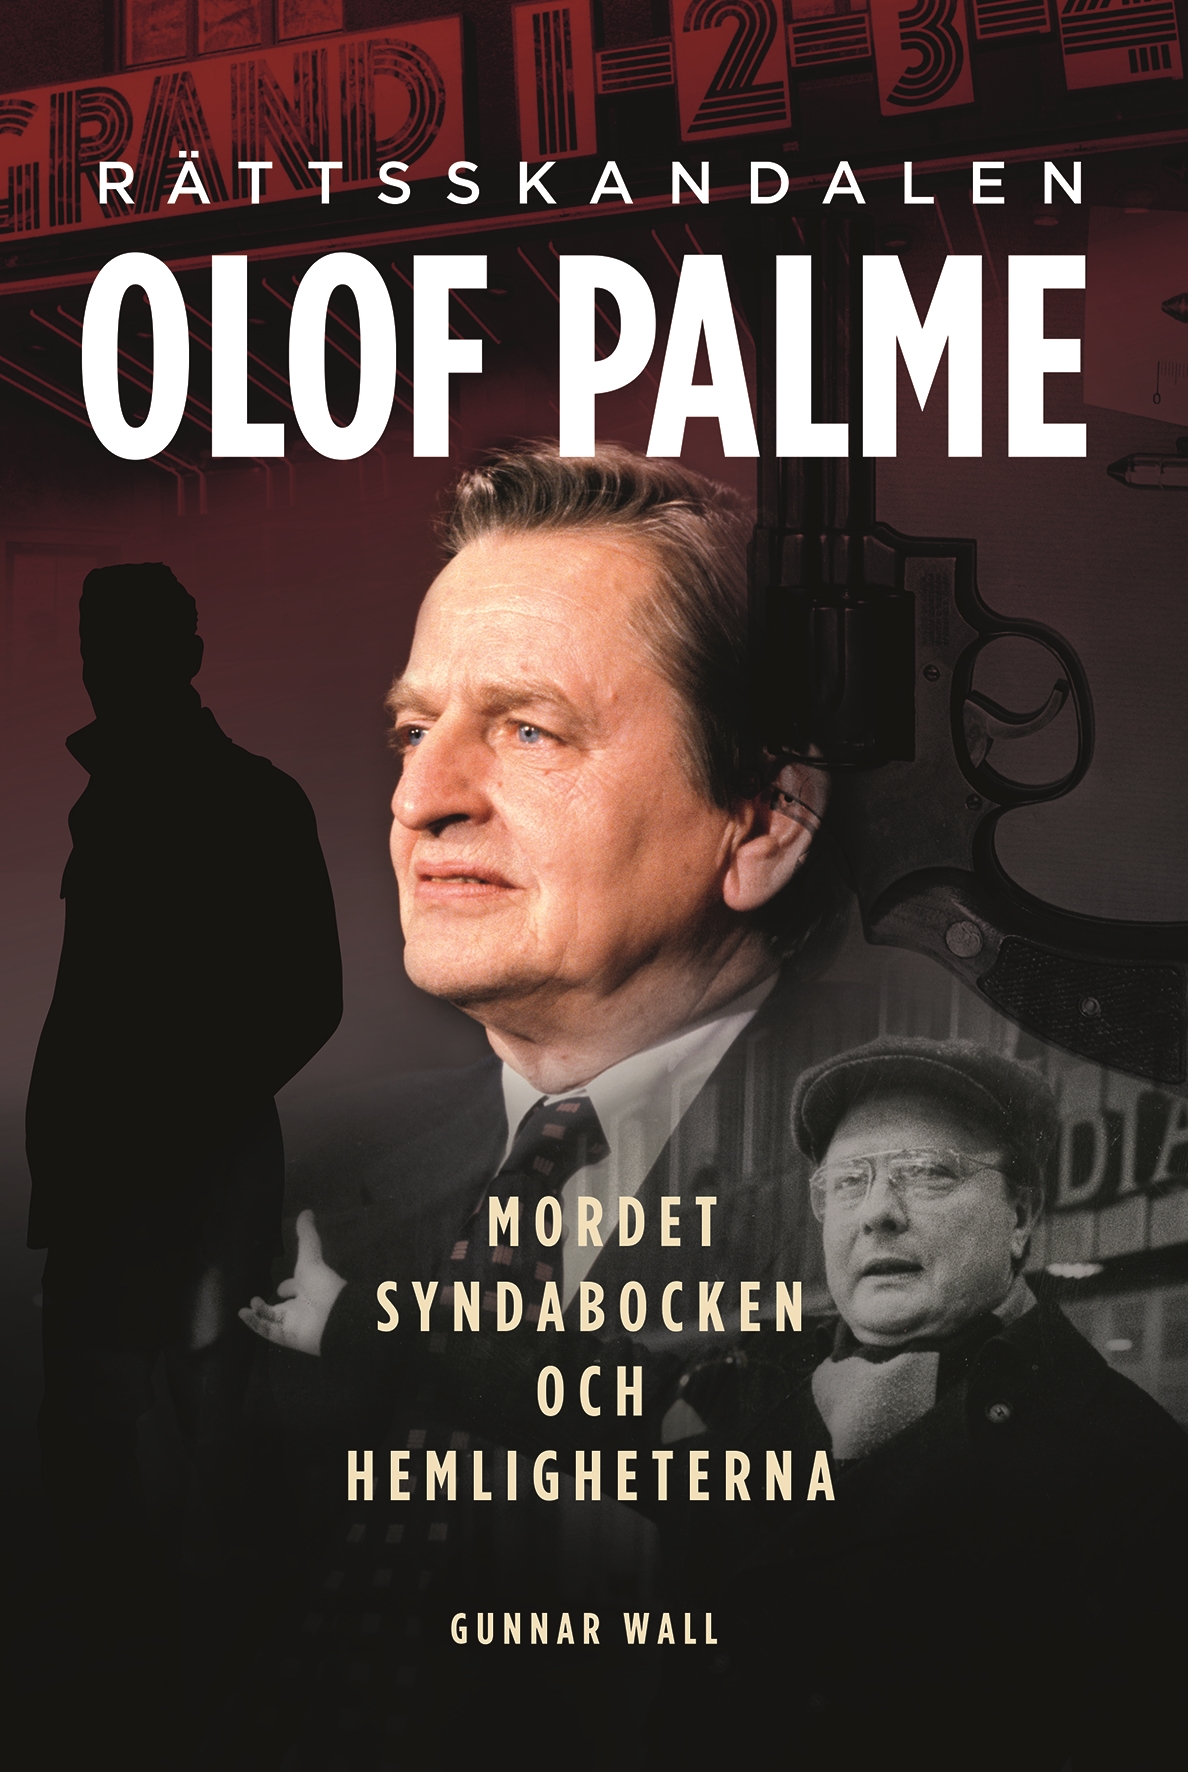 Rättsskandalen Olof Palme